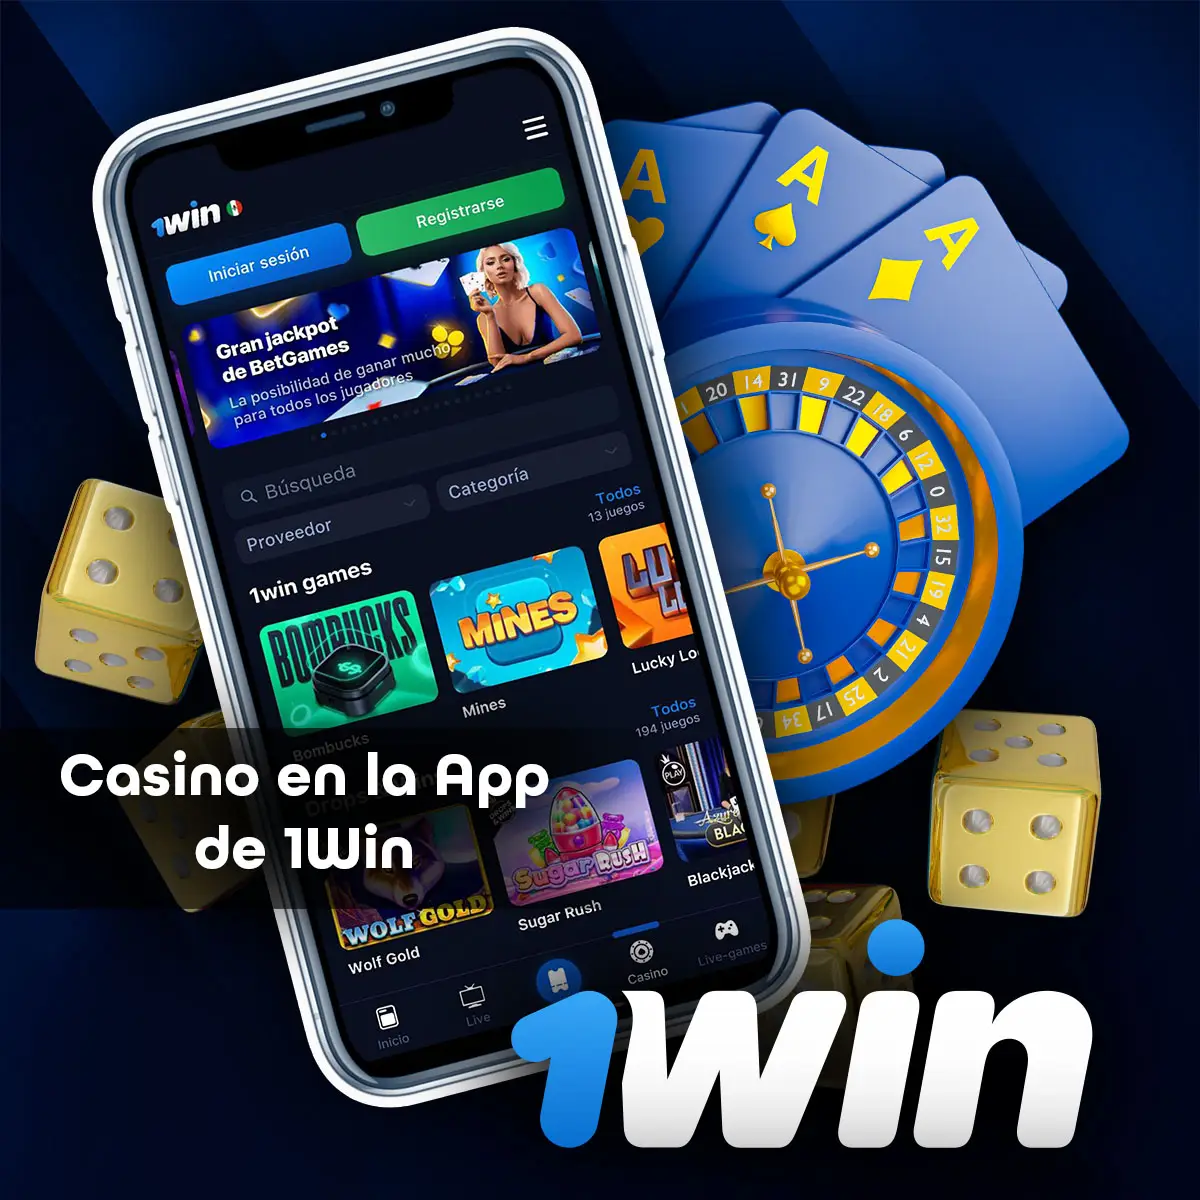 1win Casino App